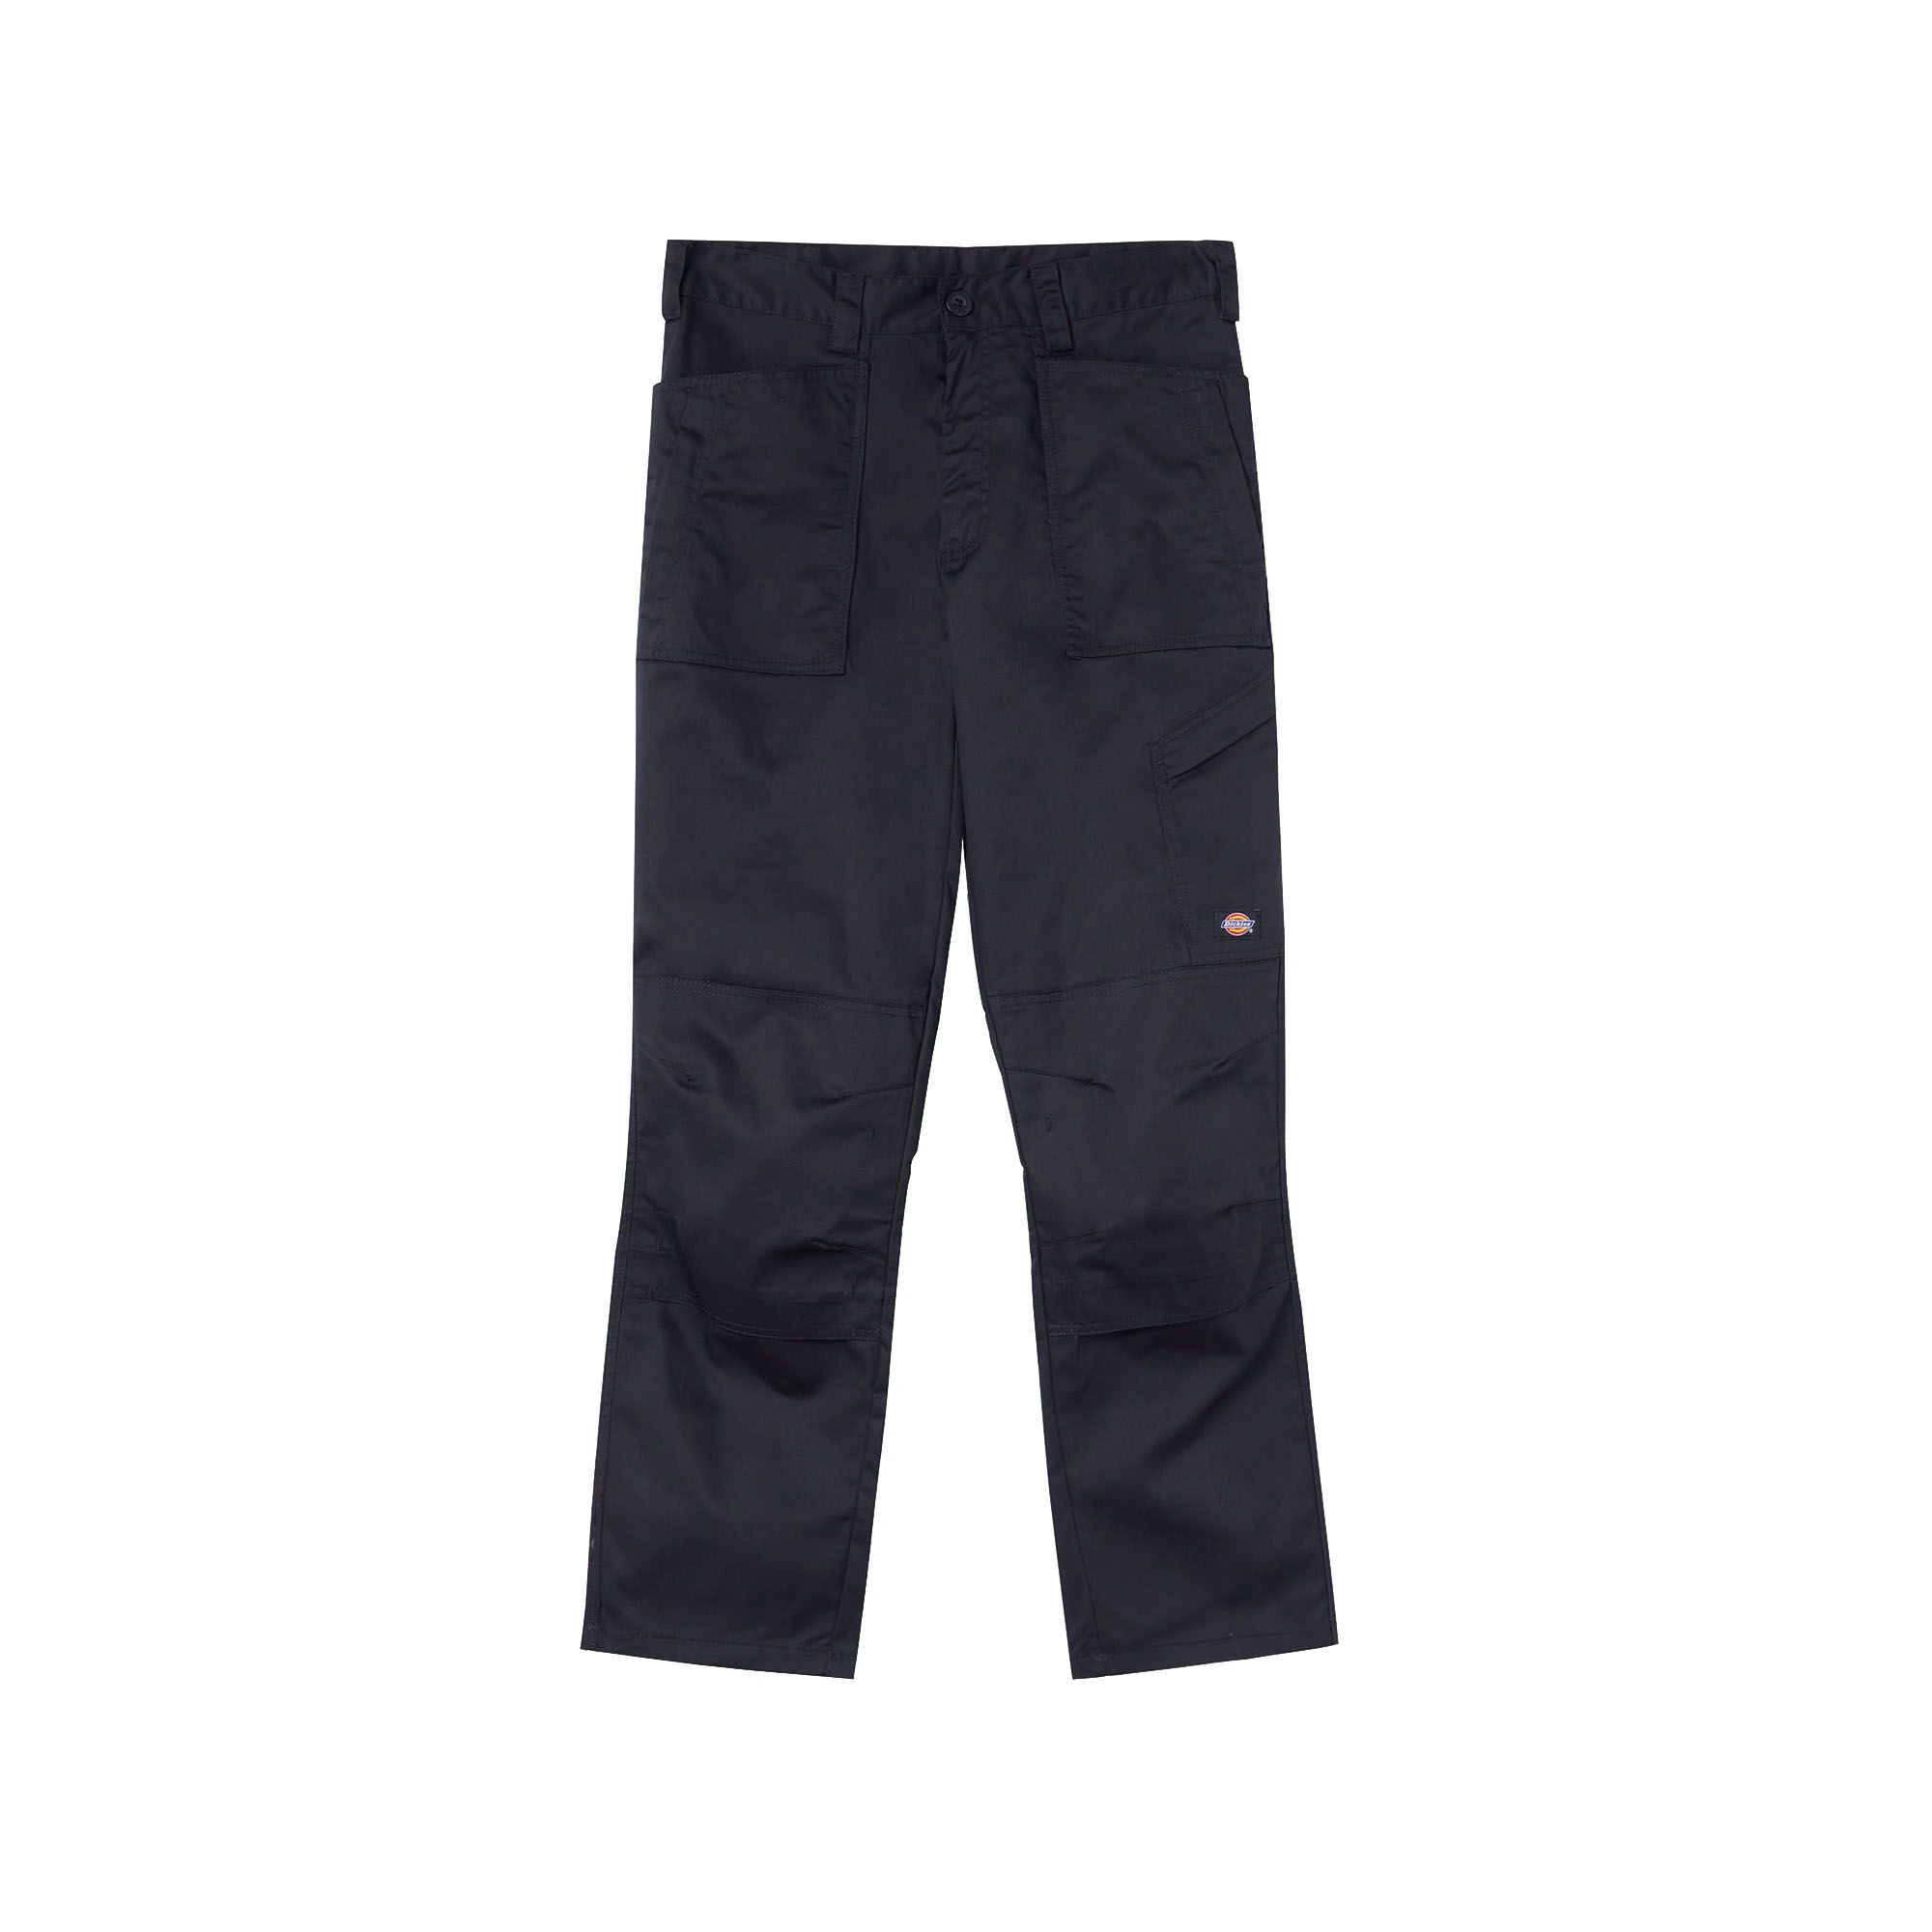 Dickies Action Flex Black Men's Multi-pocket trousers, W34